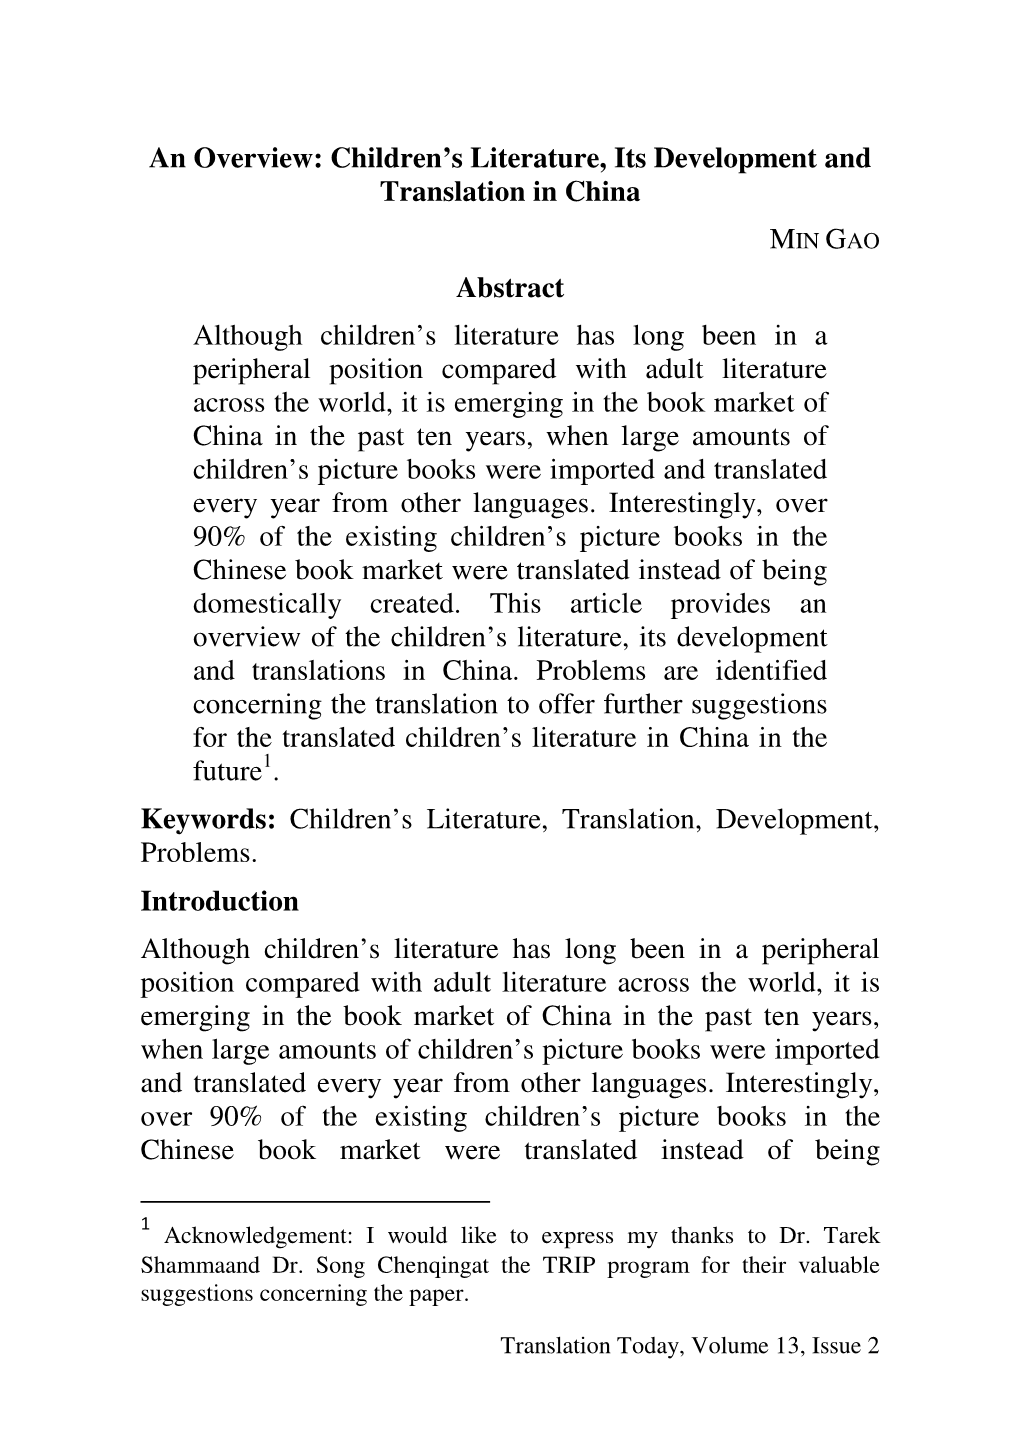 Children's Literature, Its Development and Translation in China